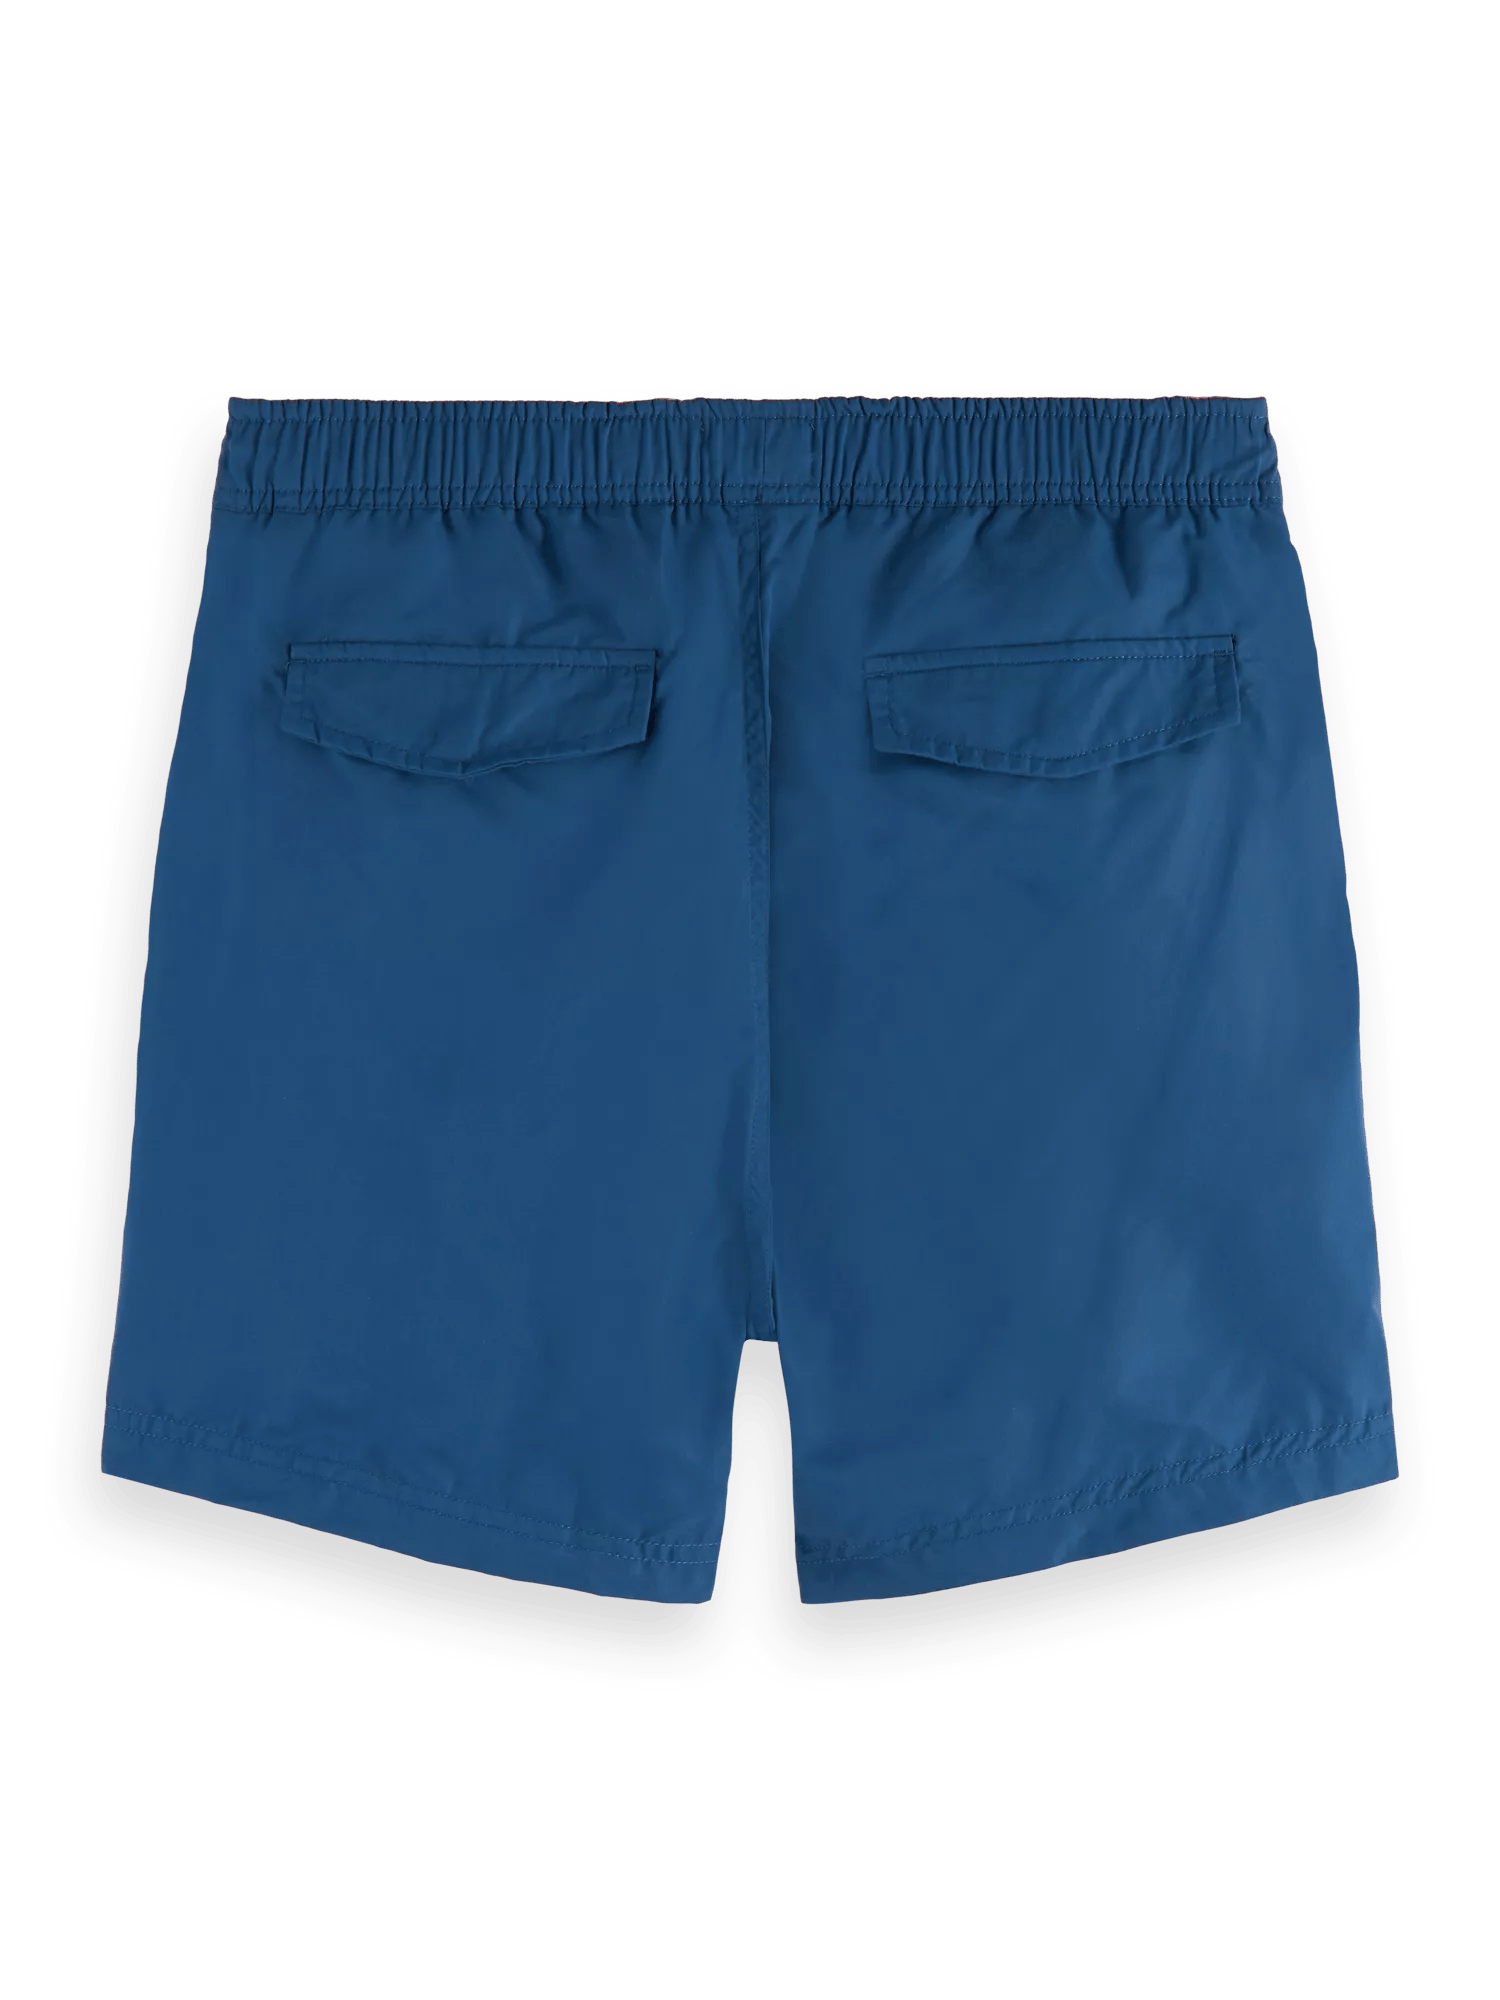 Scotch & Soda Short-Length printed swim shorts BCK